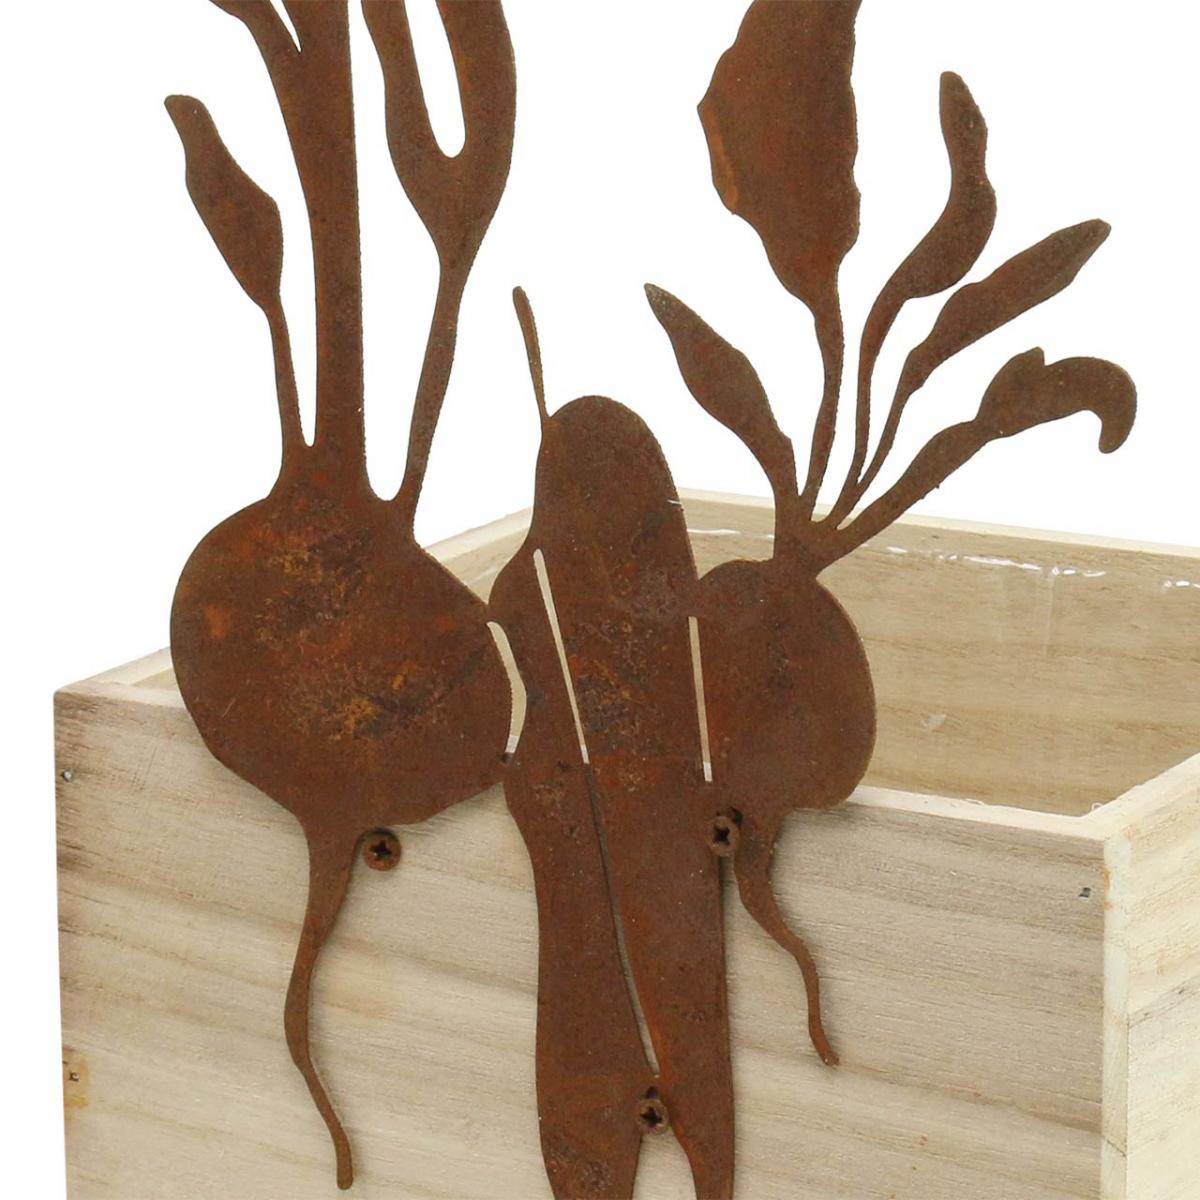 Plantenbak hout met roestdecoratie groente cachepot 17×17×12cm